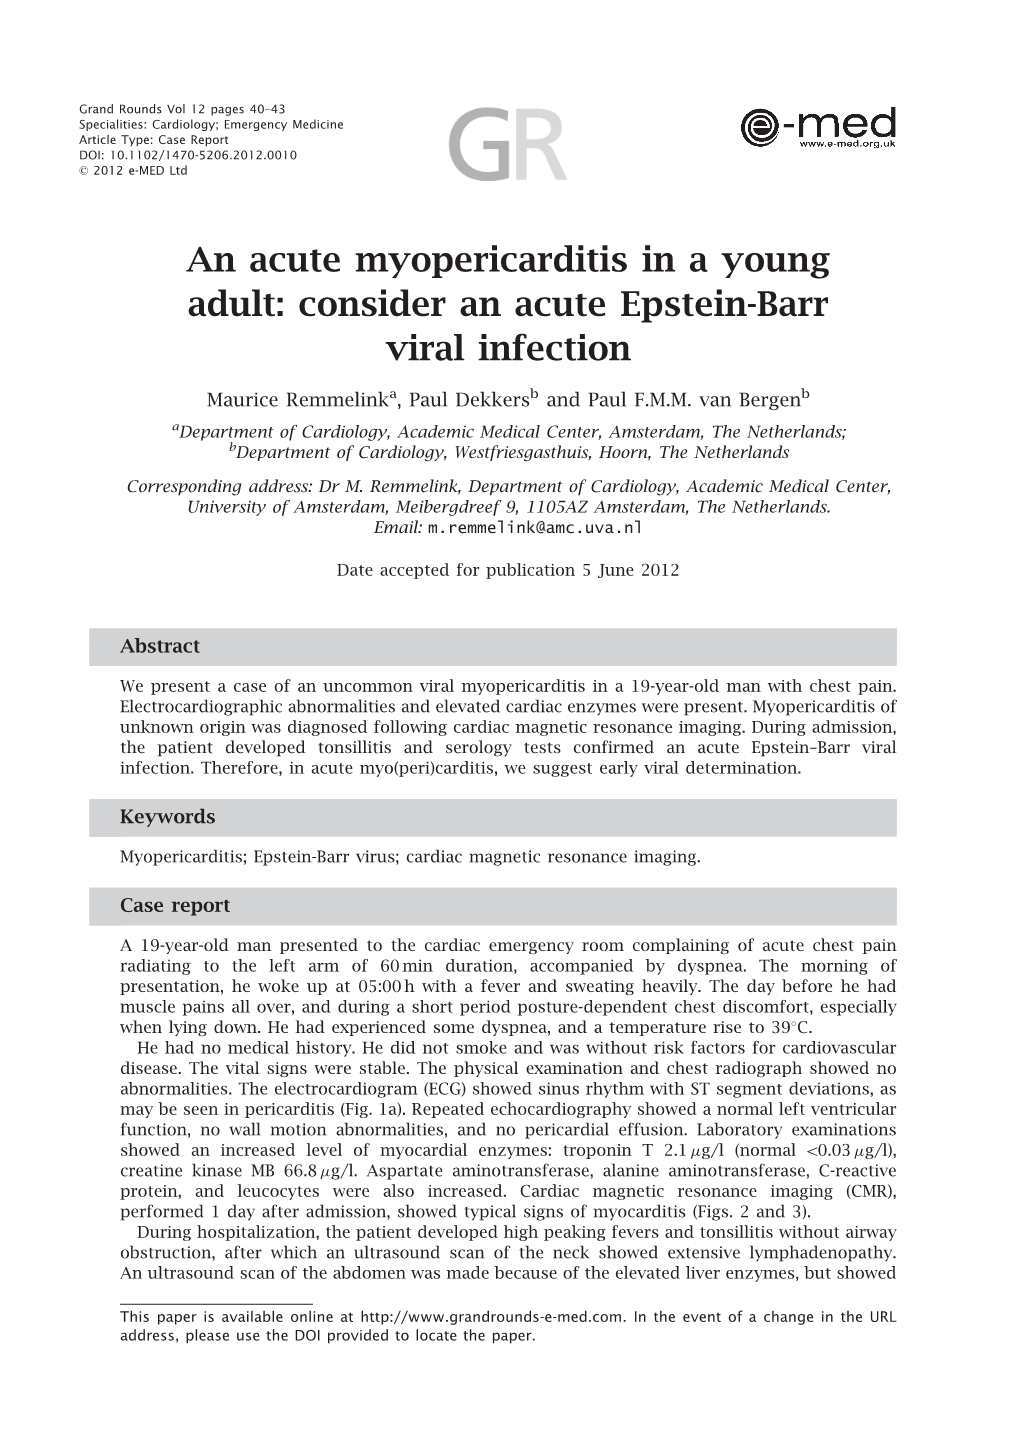 An Acute Myopericarditis in a Young Adult: Consider an Acute Epstein-Barr Viral Infection